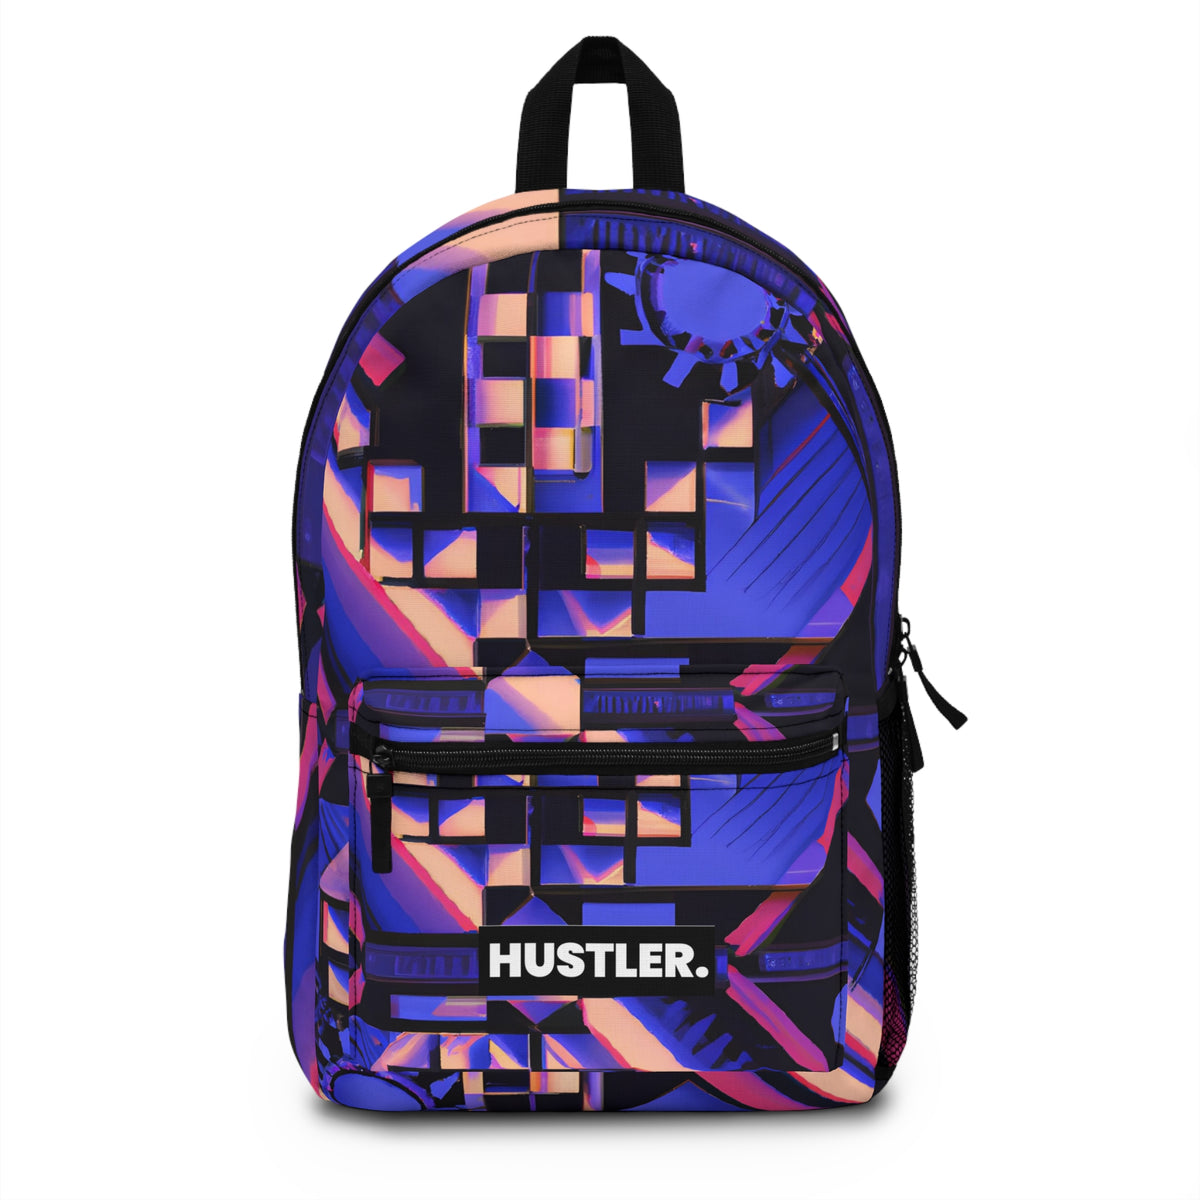 TARDISKween - Hustler Backpack